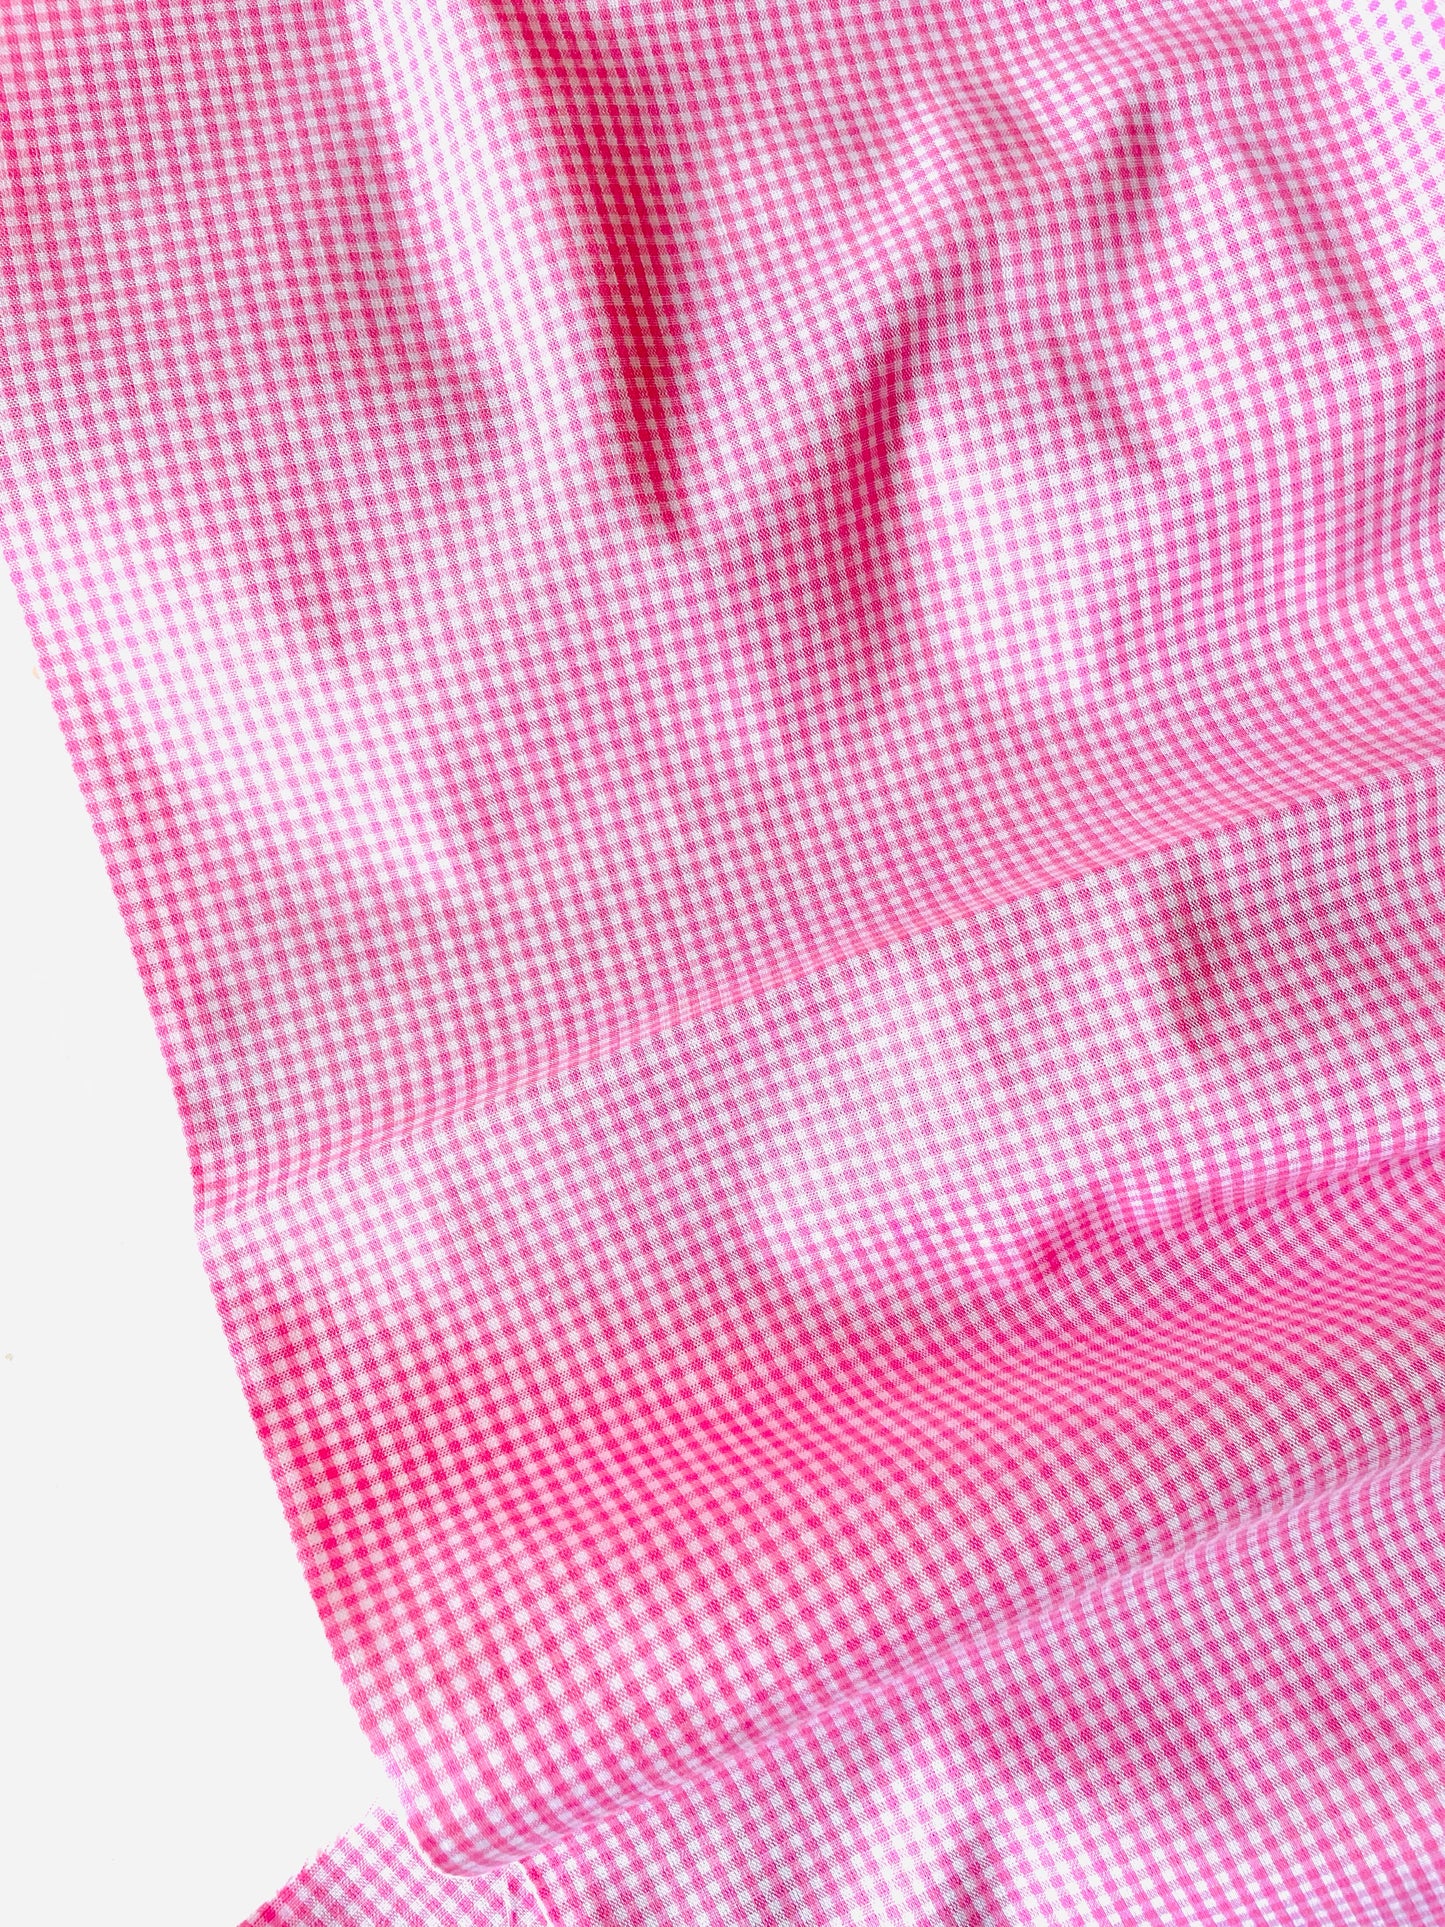 Mini Gingham - pink (2mm grid)